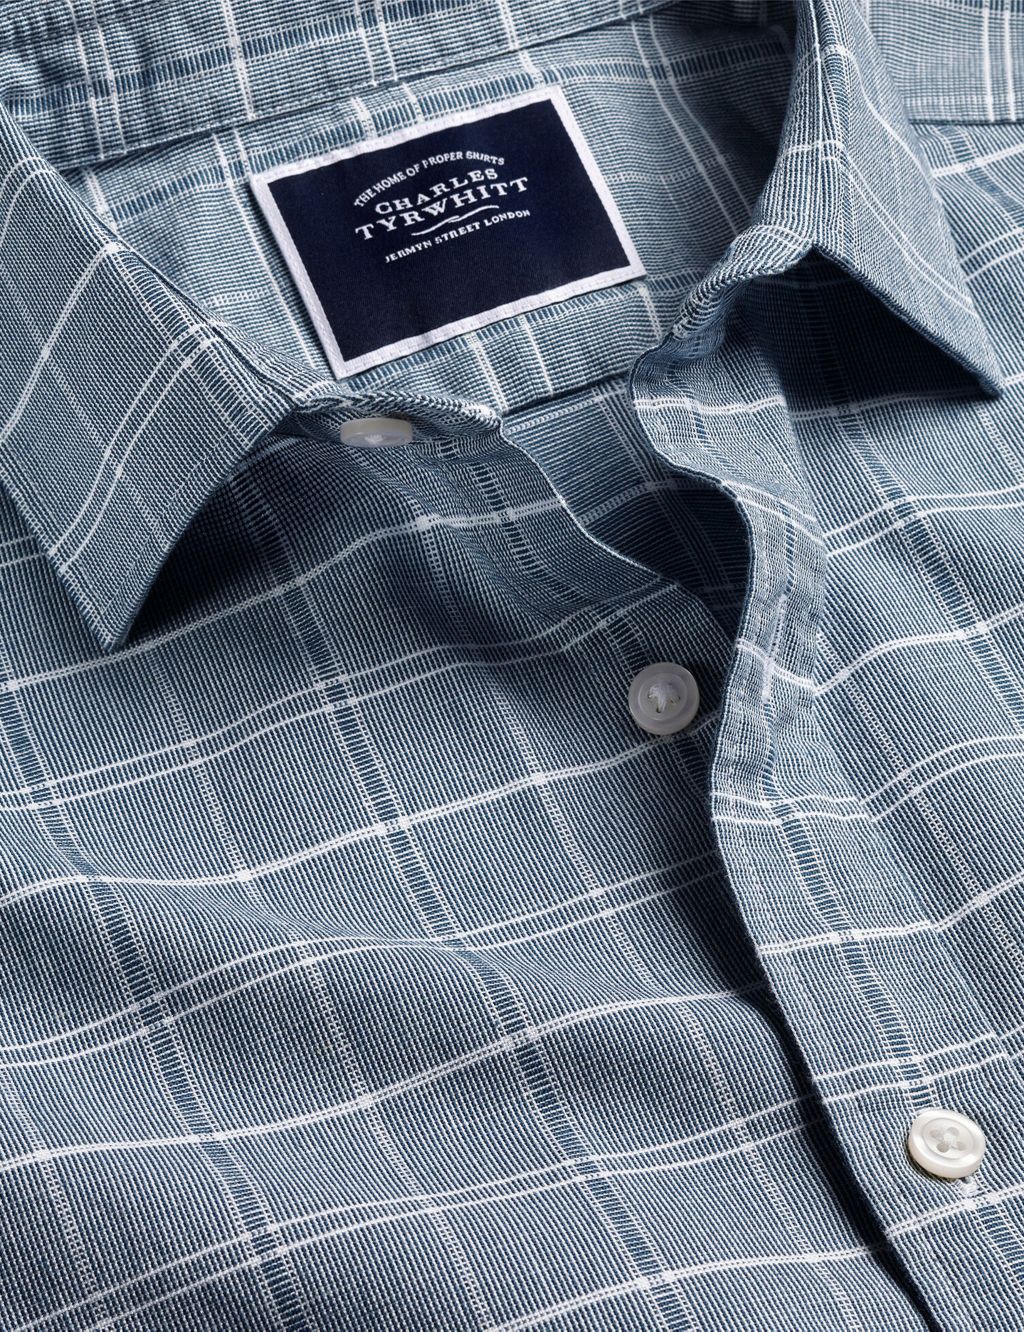 Buy Slim Fit Cotton Rich Check Oxford Shirt | Charles Tyrwhitt | M&S